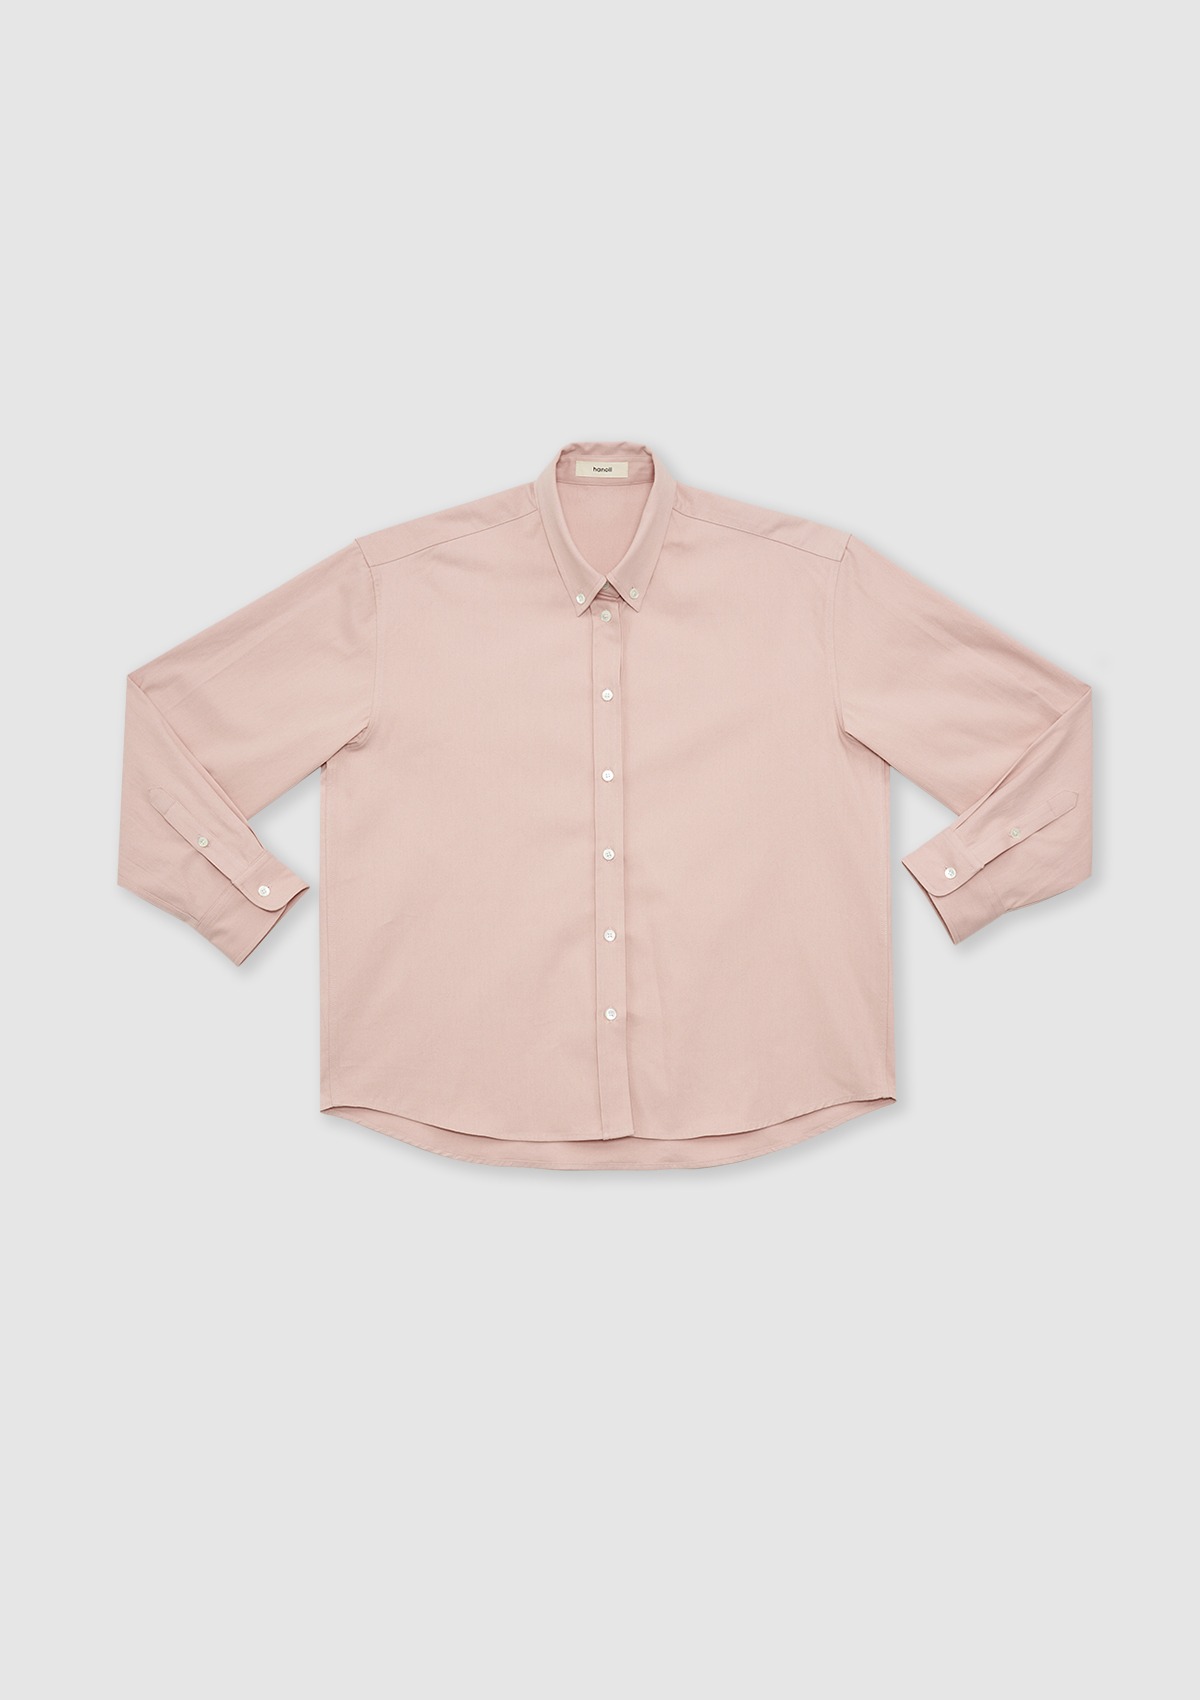 Down Shirt (Pink)